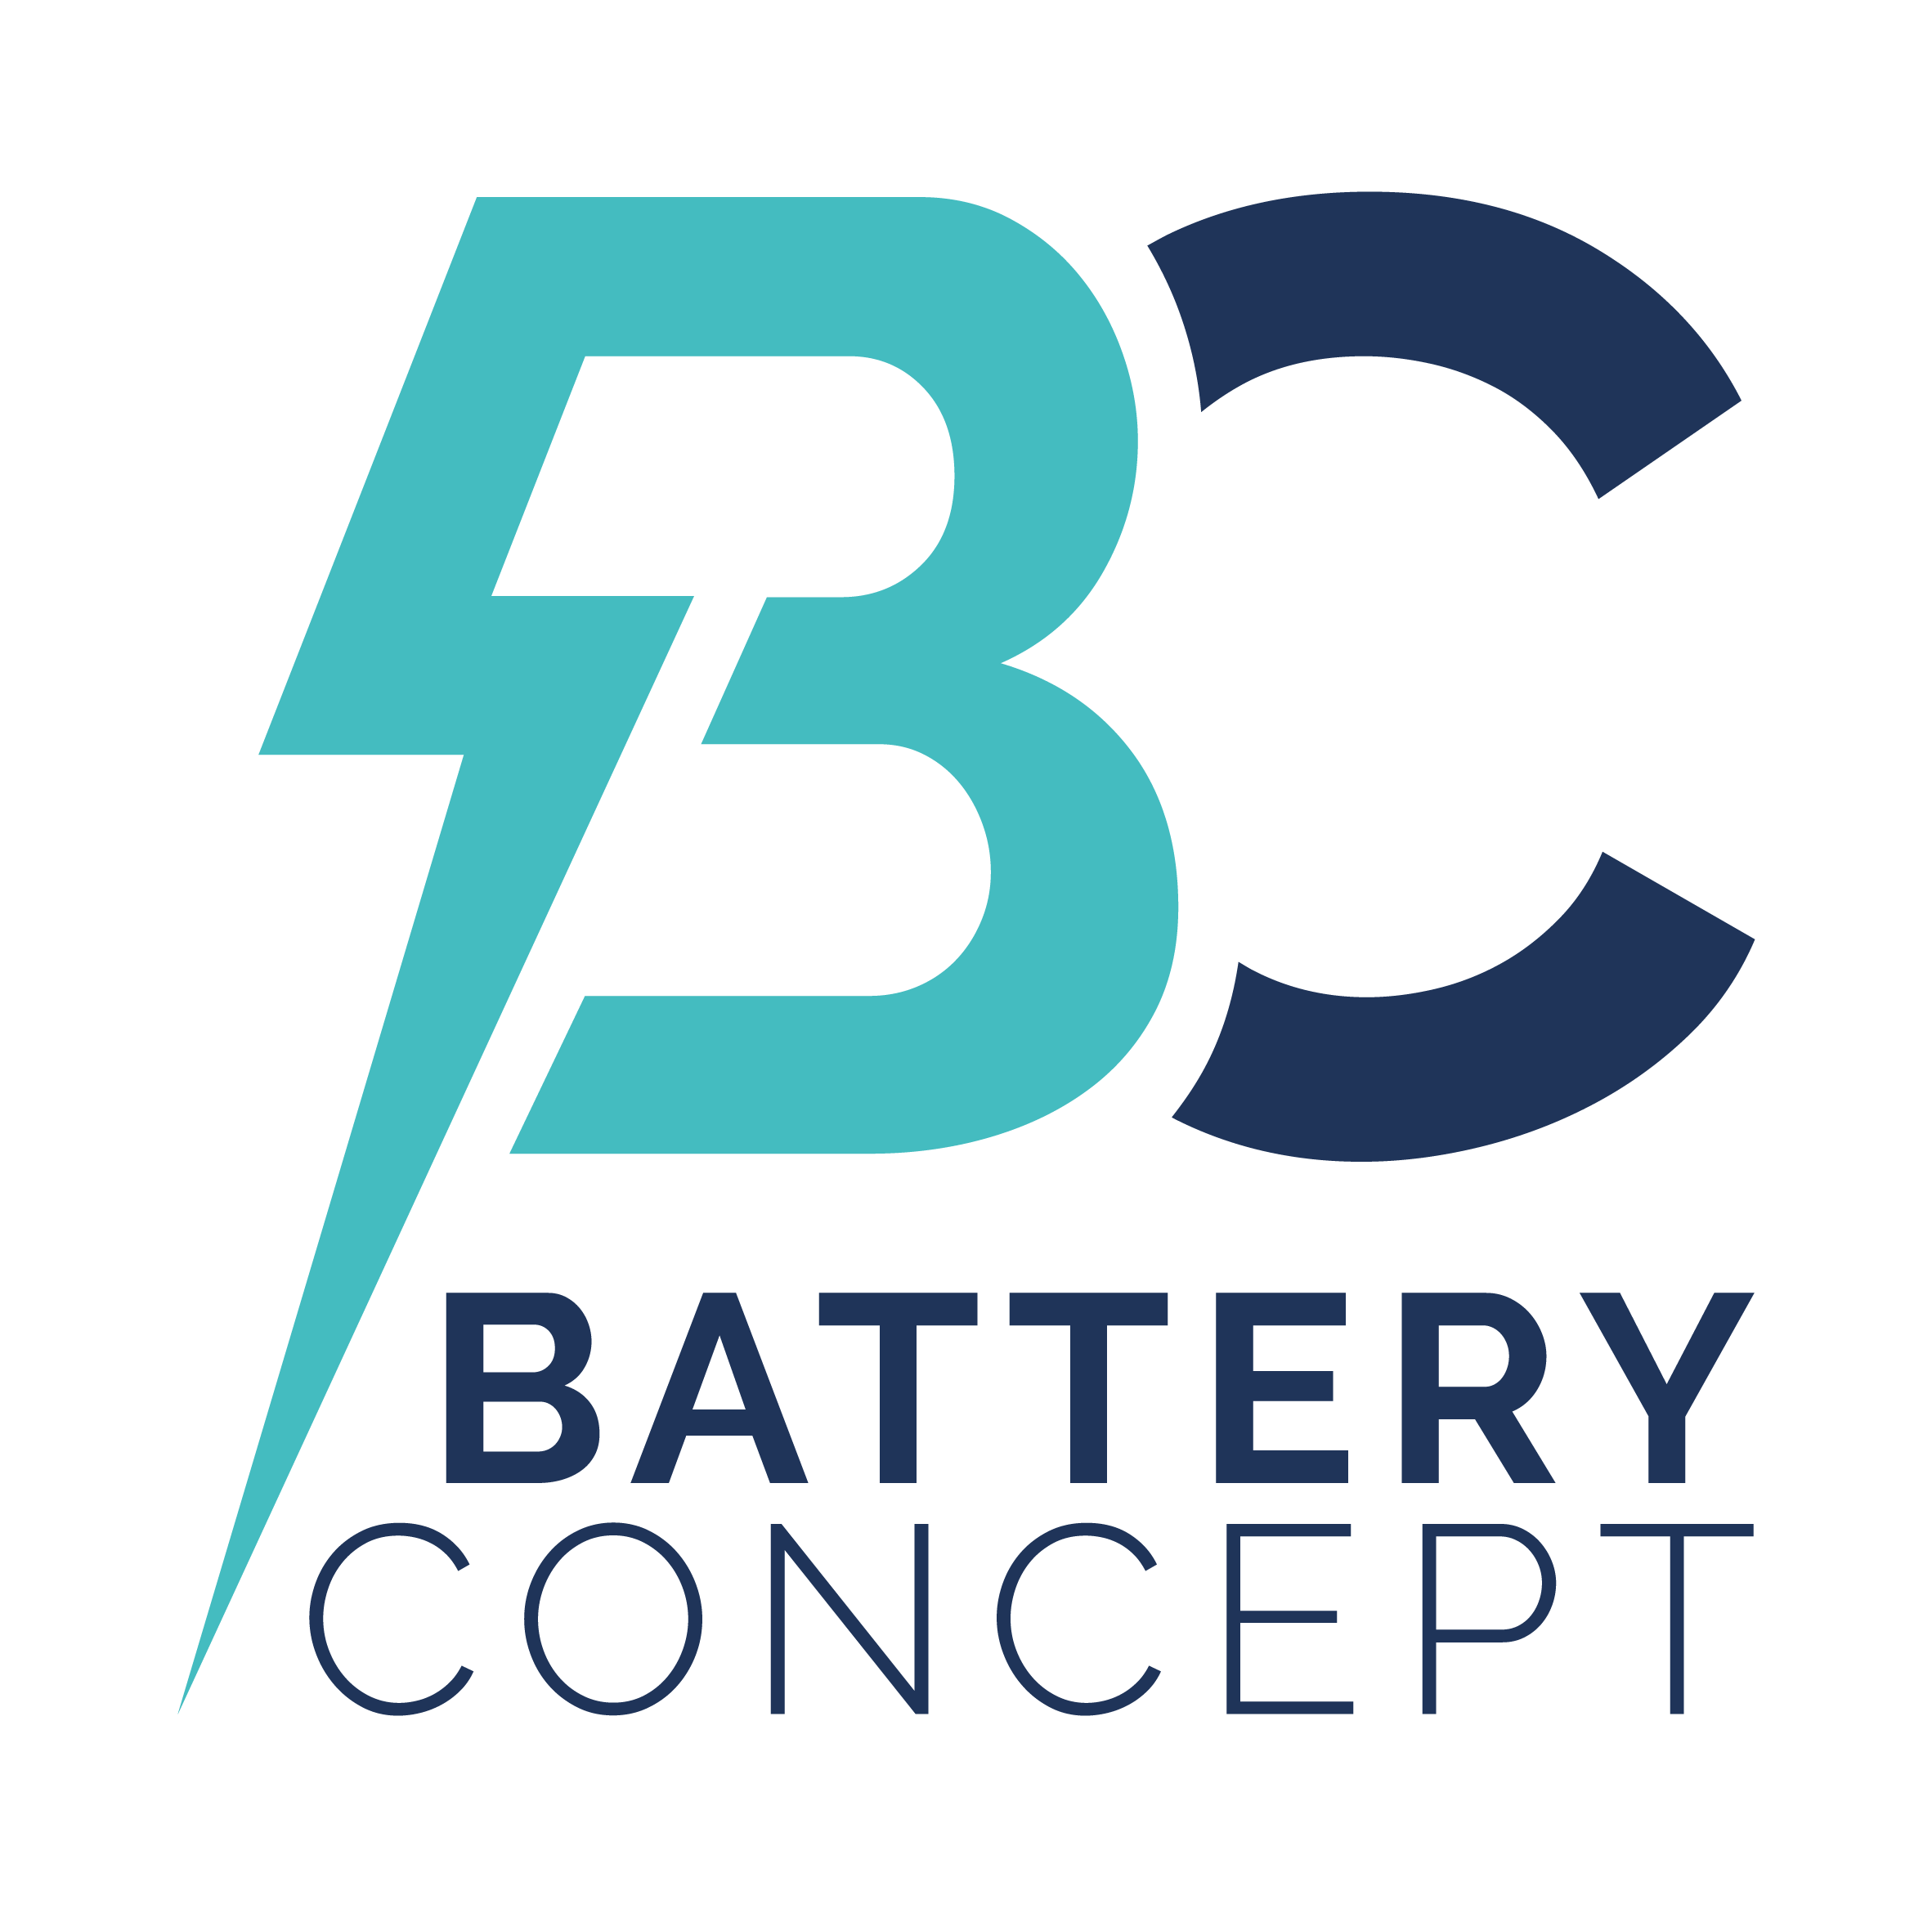 BatteryConcept-logo-vertical.png
